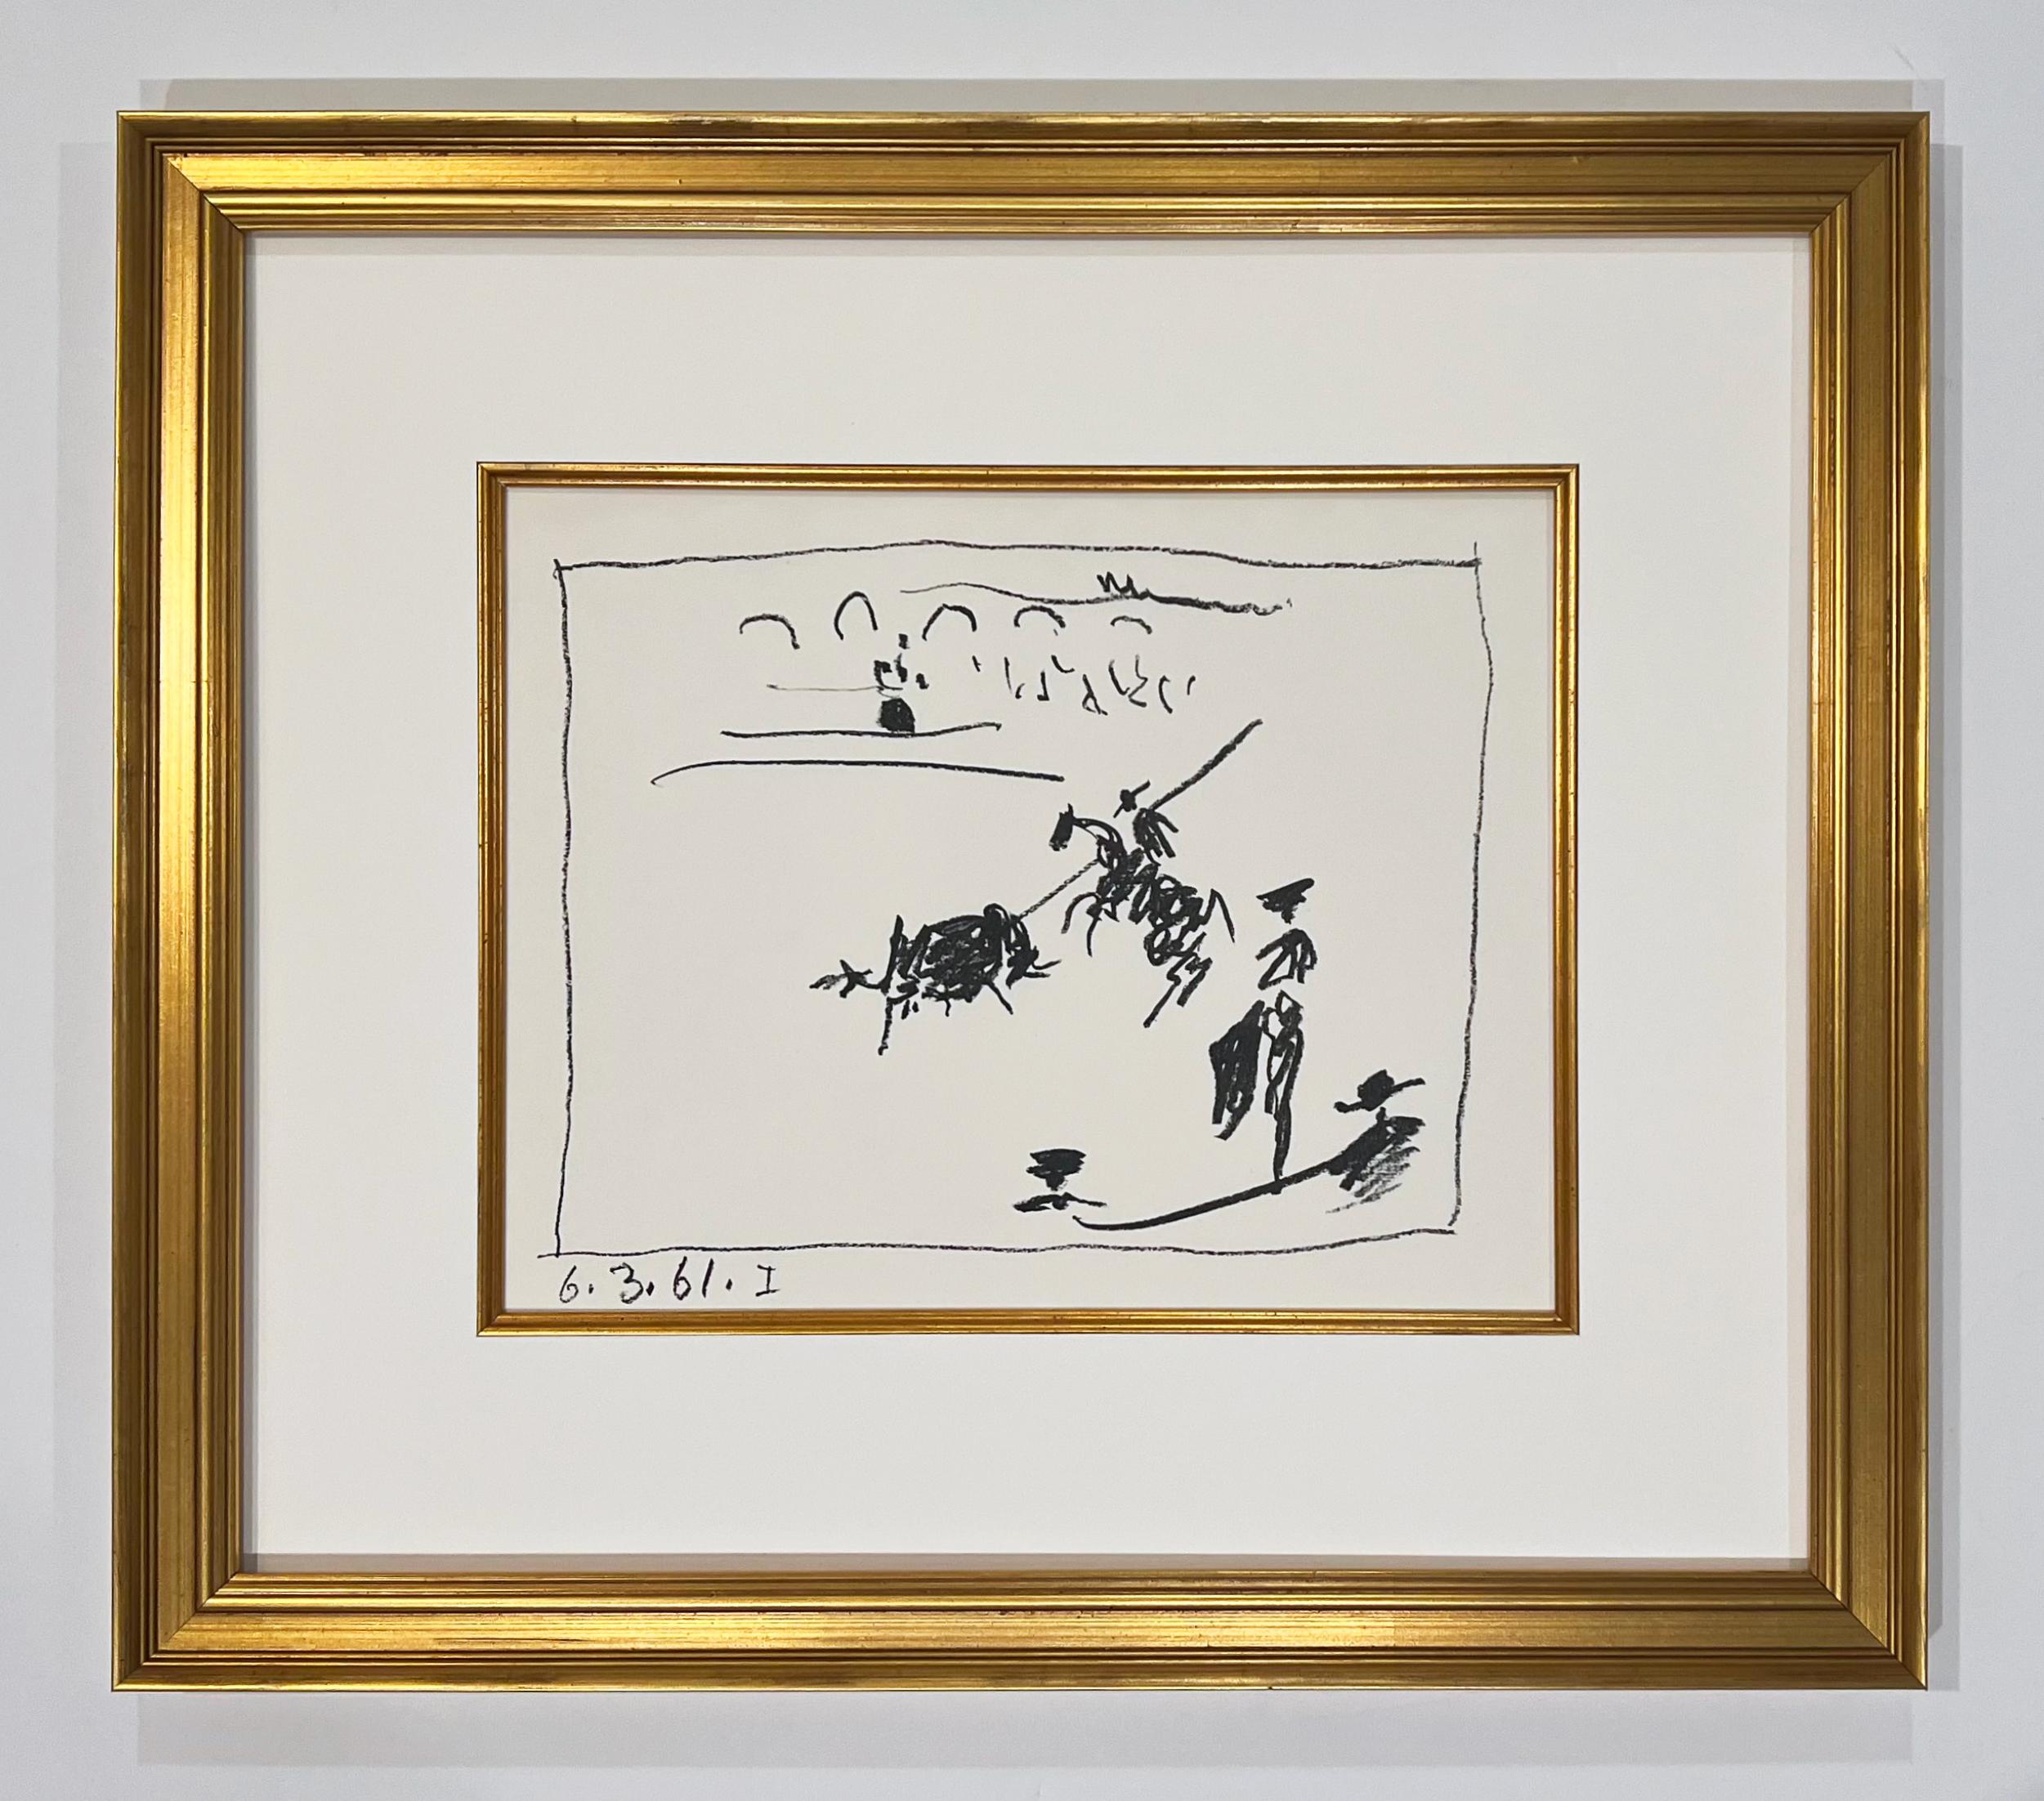 Artist: Pablo Picasso
Title: La Pique (I), Le Picador (II), Jeu de la Cape (III), Les Banderilles (IV)
Portfolio: A Los Toros Avec Picasso
Medium: Set of four transfer lithographs
Year: 1961
Edition: Unnumbered
Frame Size: 16 3/4